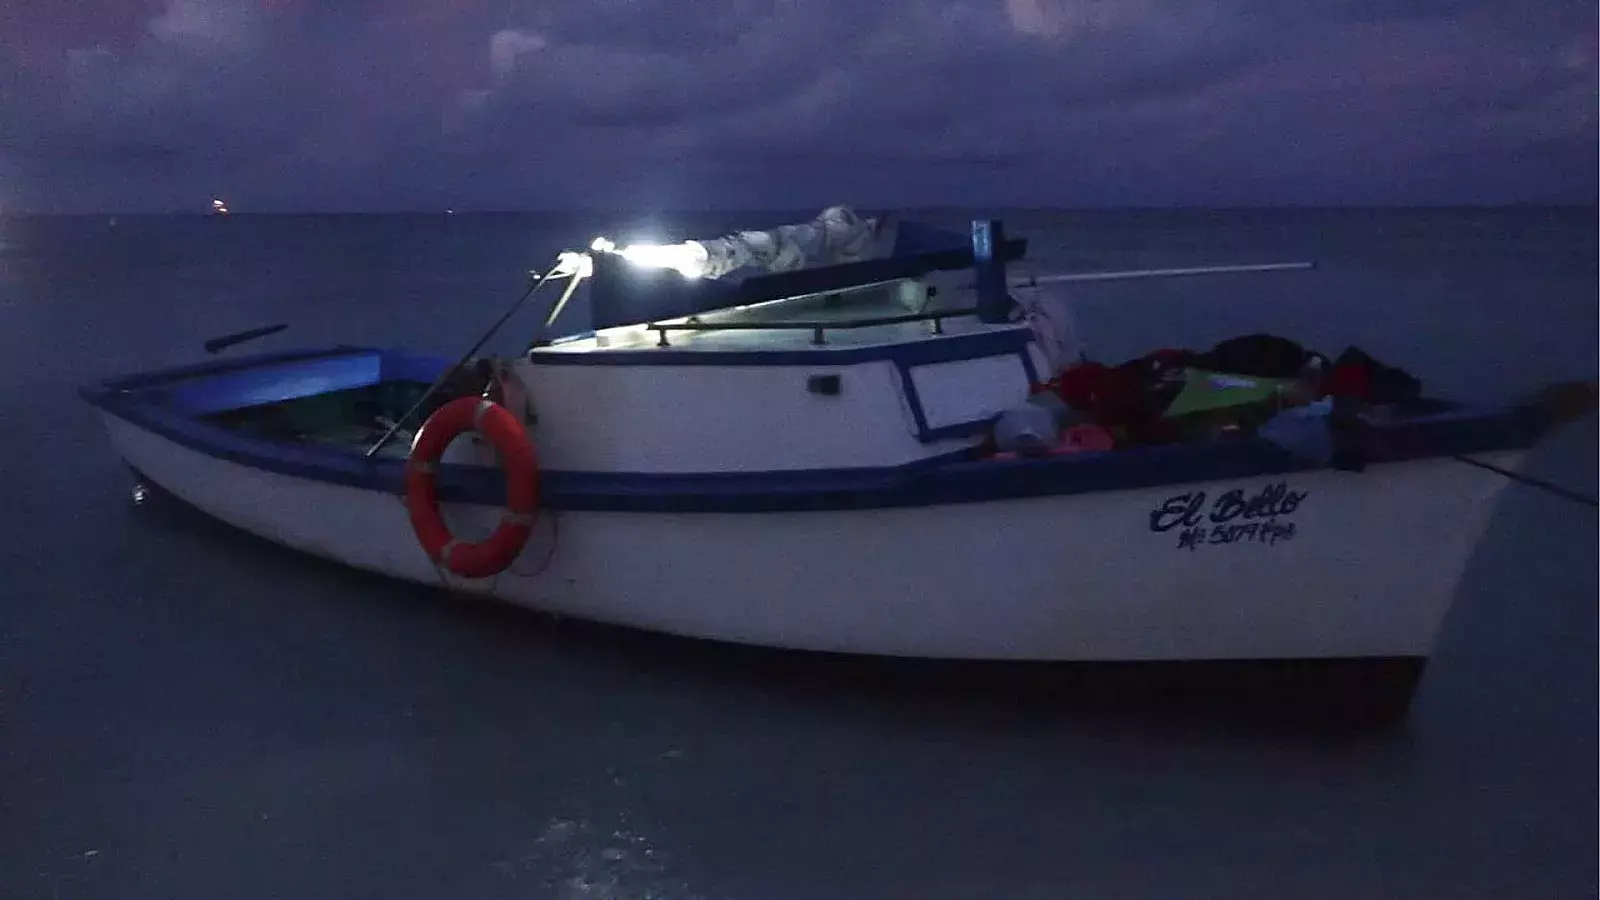 Embarcación cubana empleada para migrar por mar